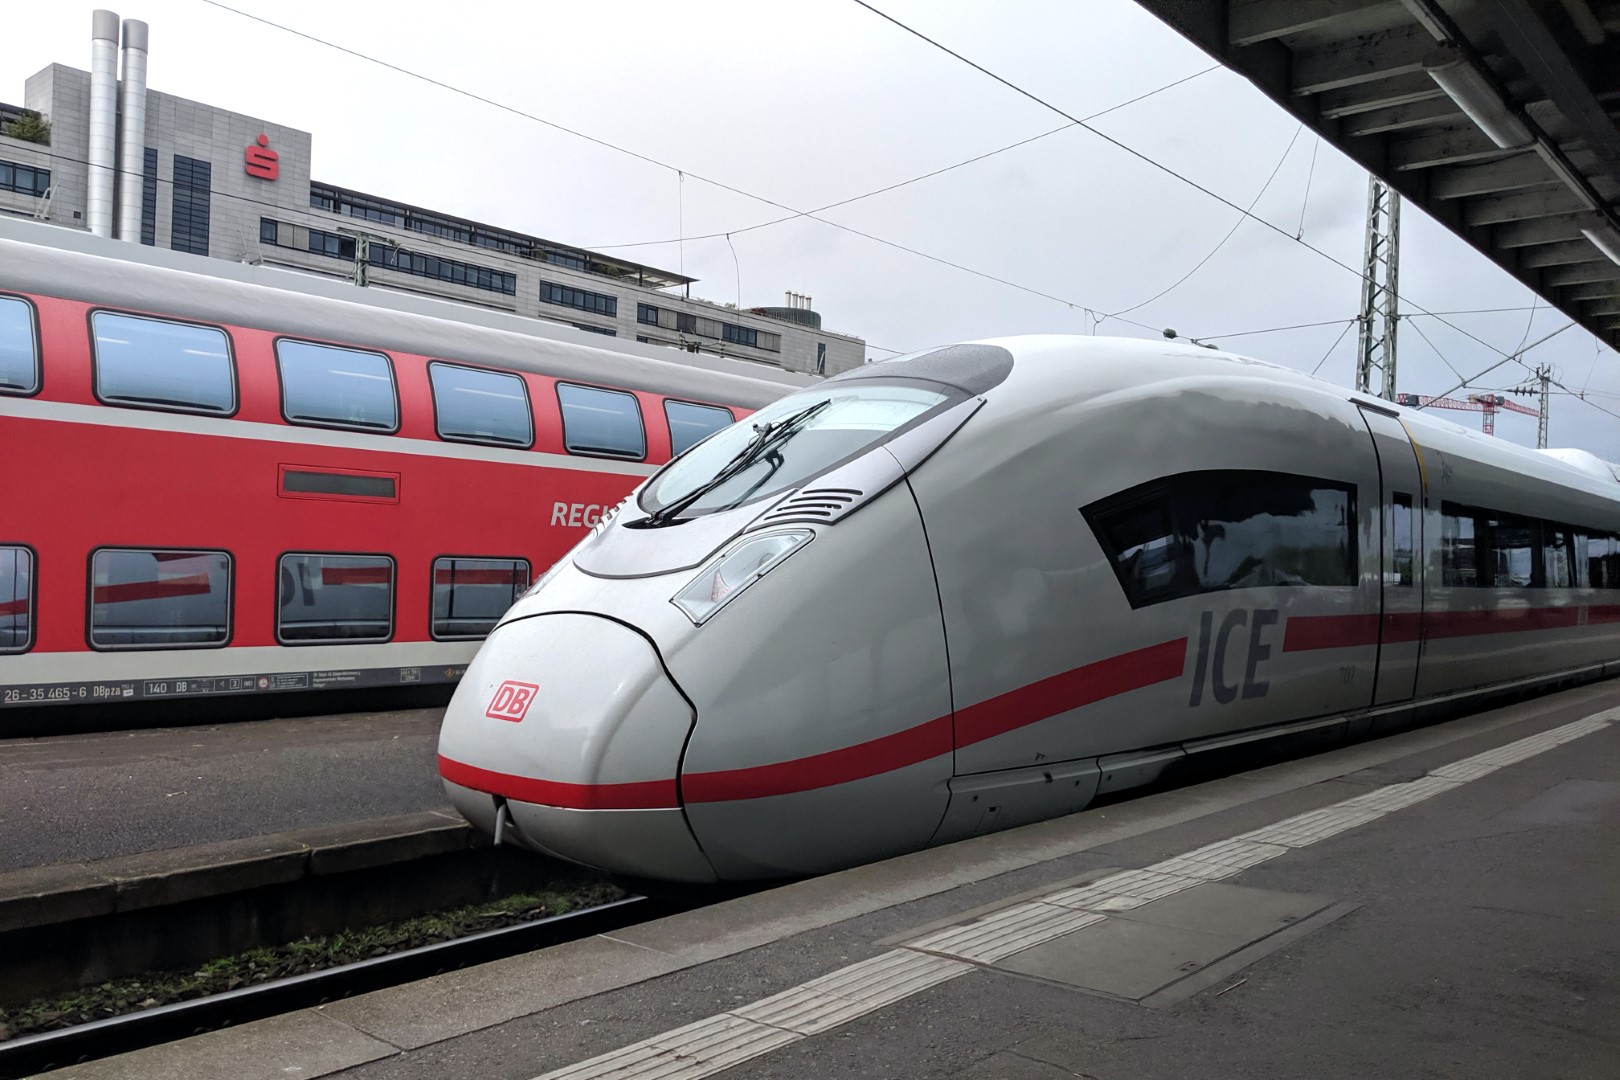 German Train Tickets Explained Understanding Deutsche Bahn ...